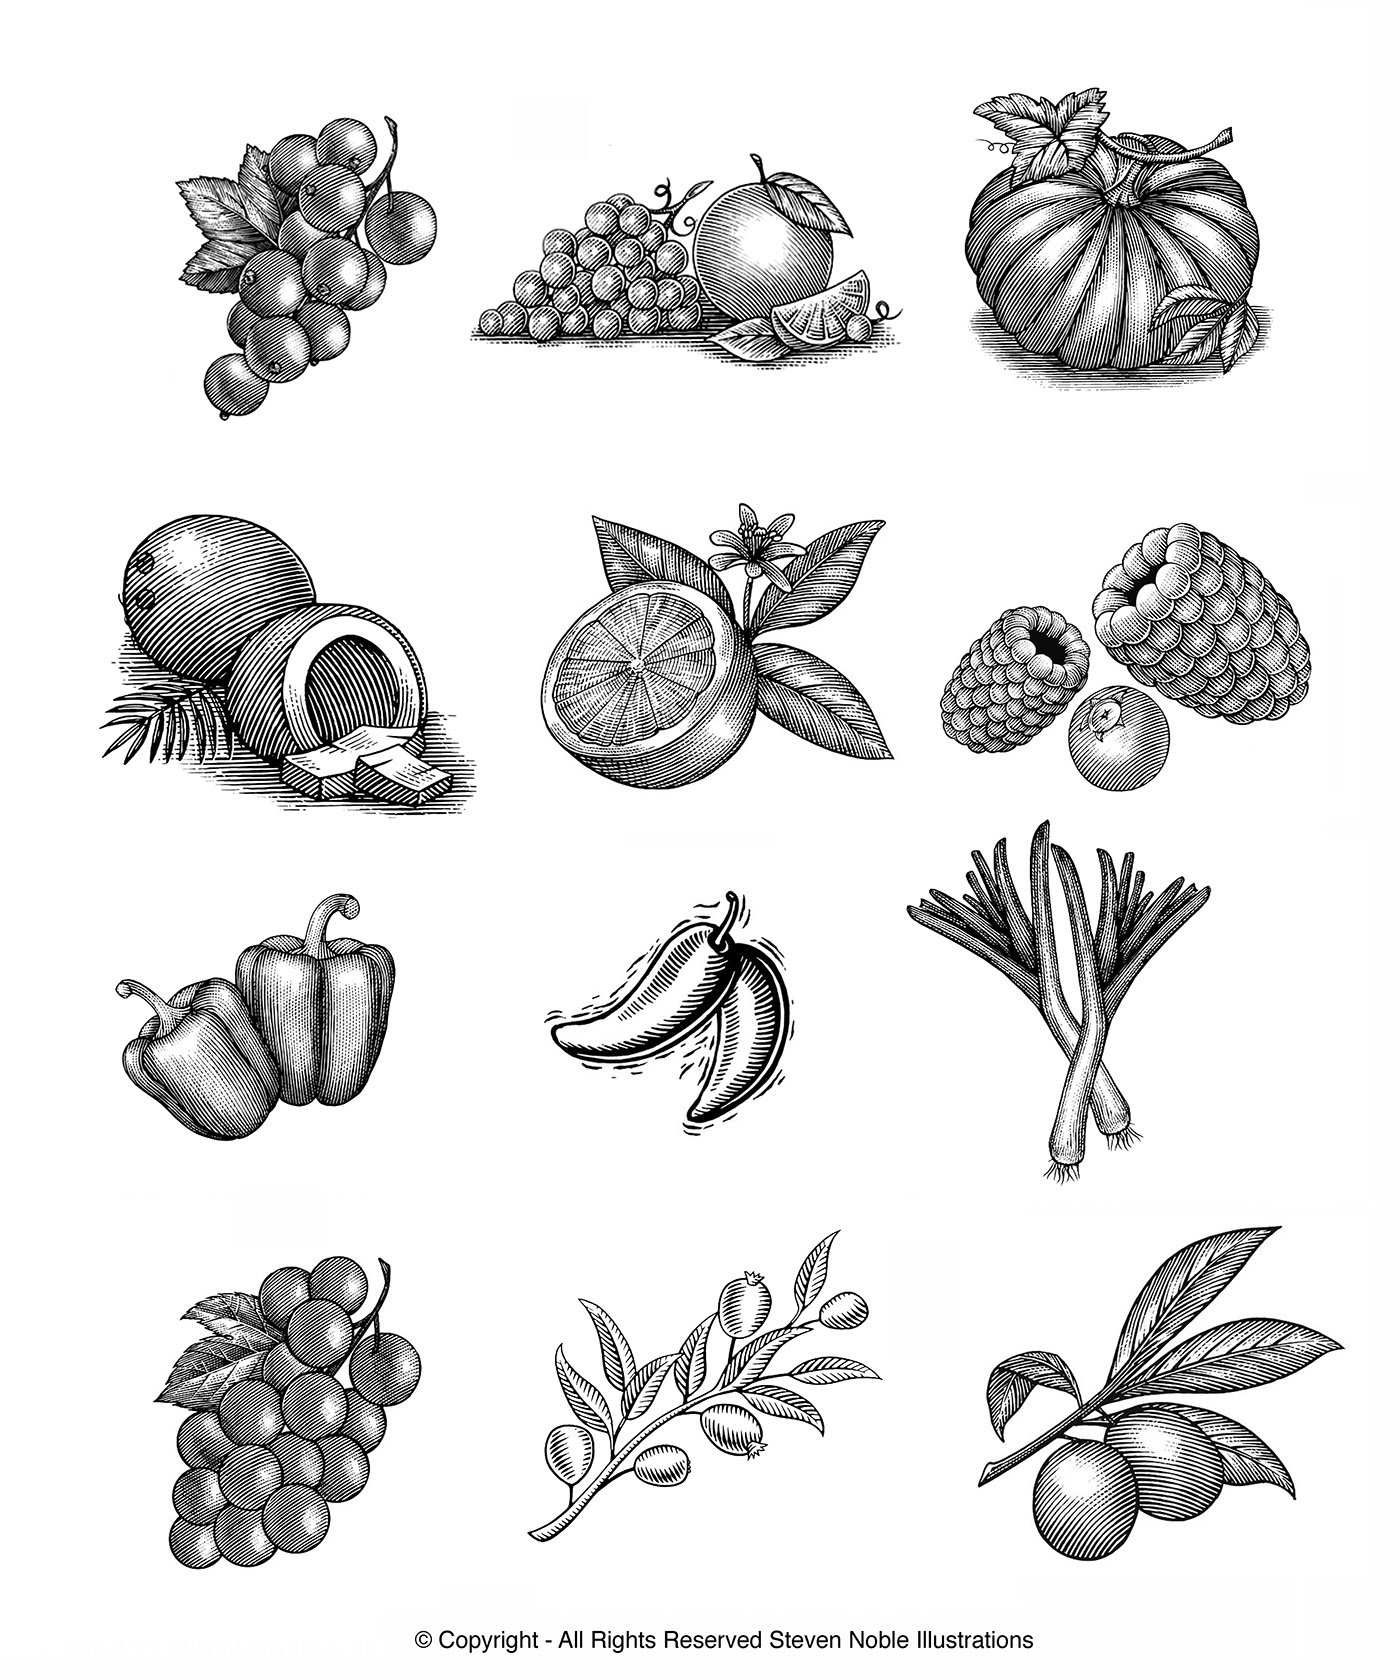 artwork artist Illustrator woodcut linocut vegetable Fruit